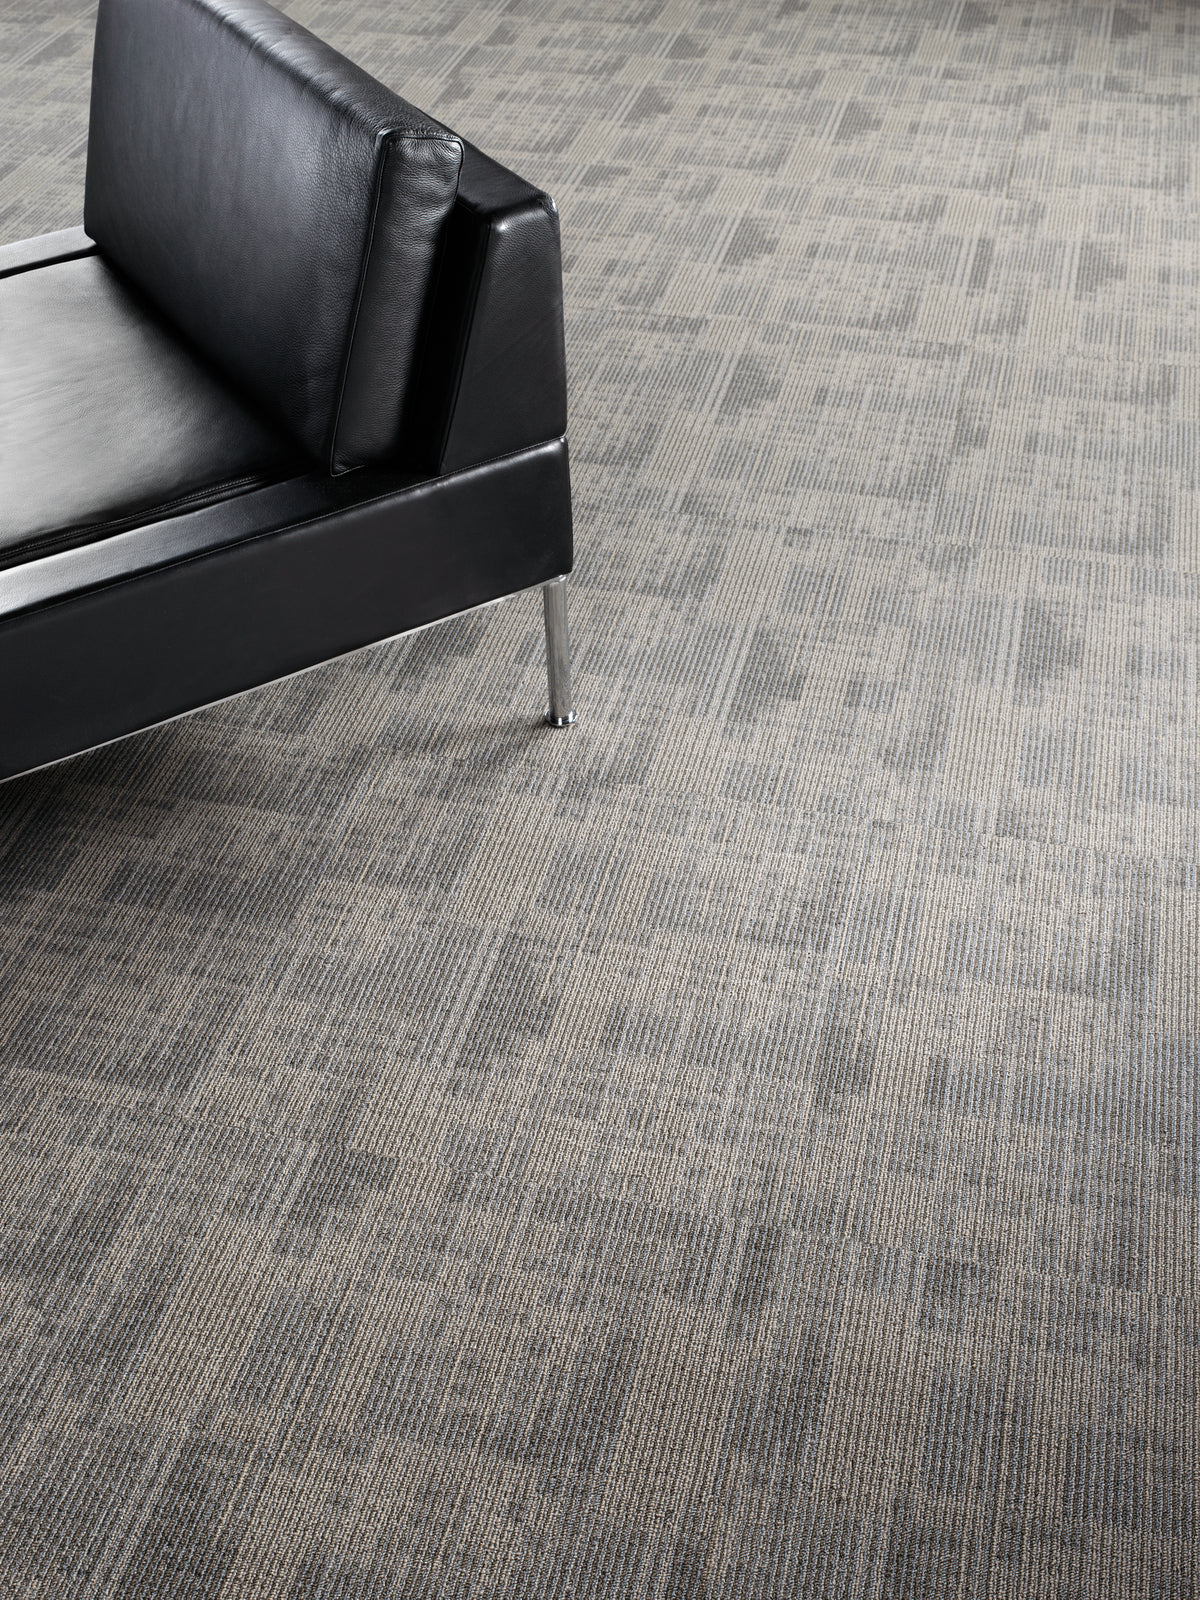 Mohawk Group - Bending Earth - Caliber - Commercial Carpet Tile - Shale